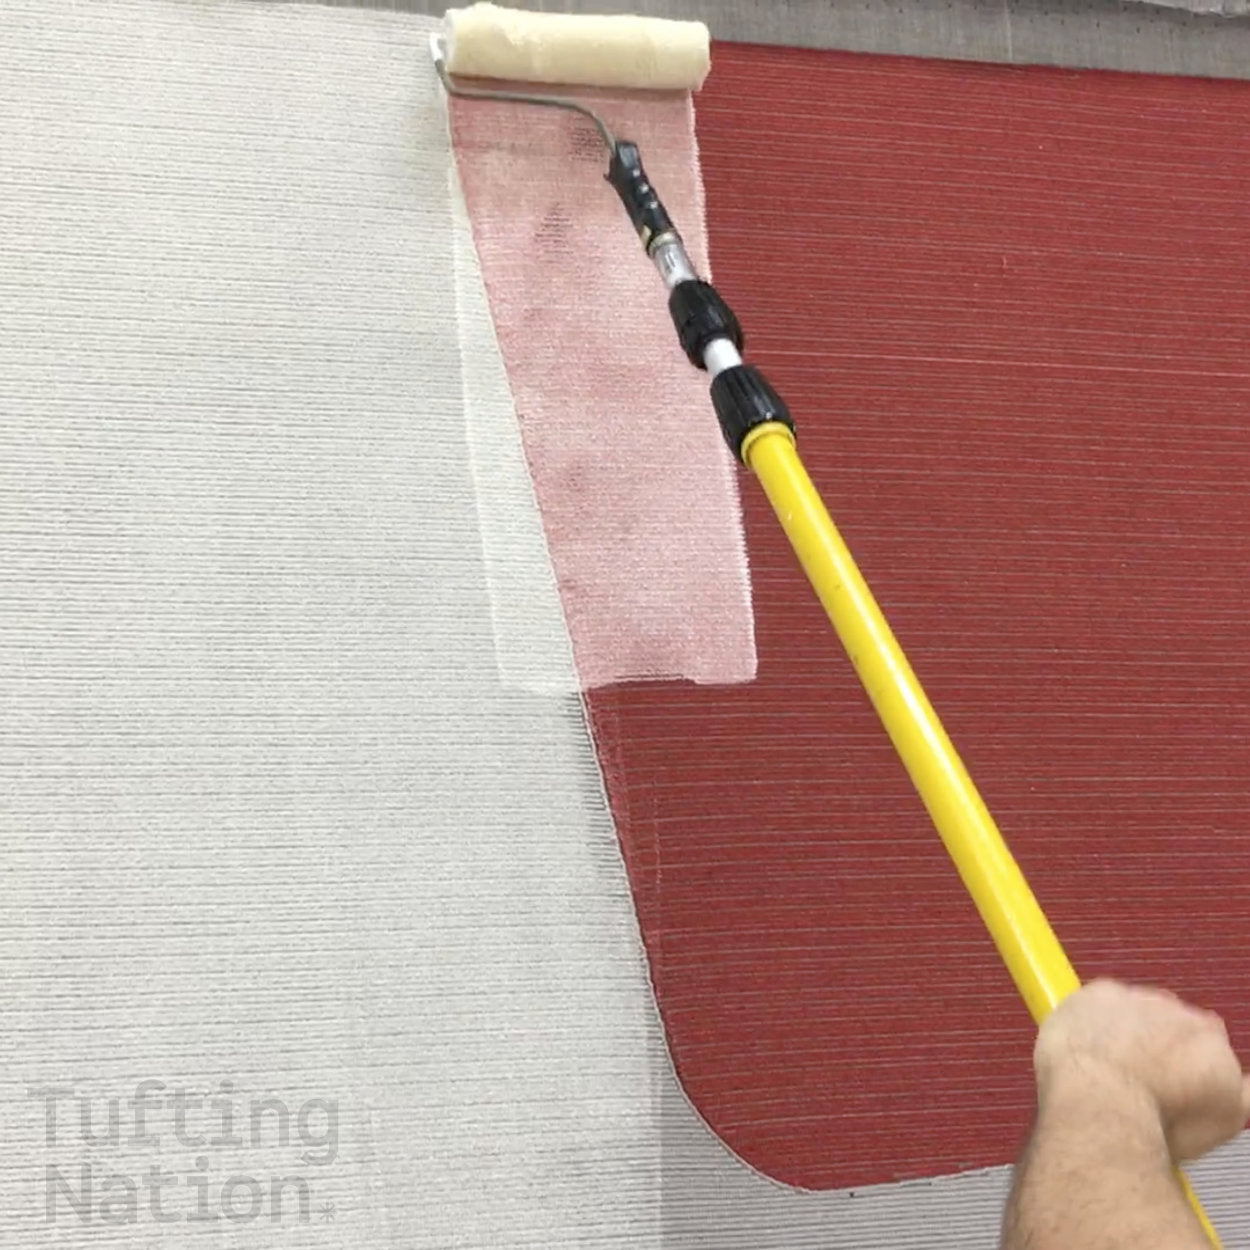 Carpet Adhesive for Rug Tufting and Rug Making  | TuftingNation